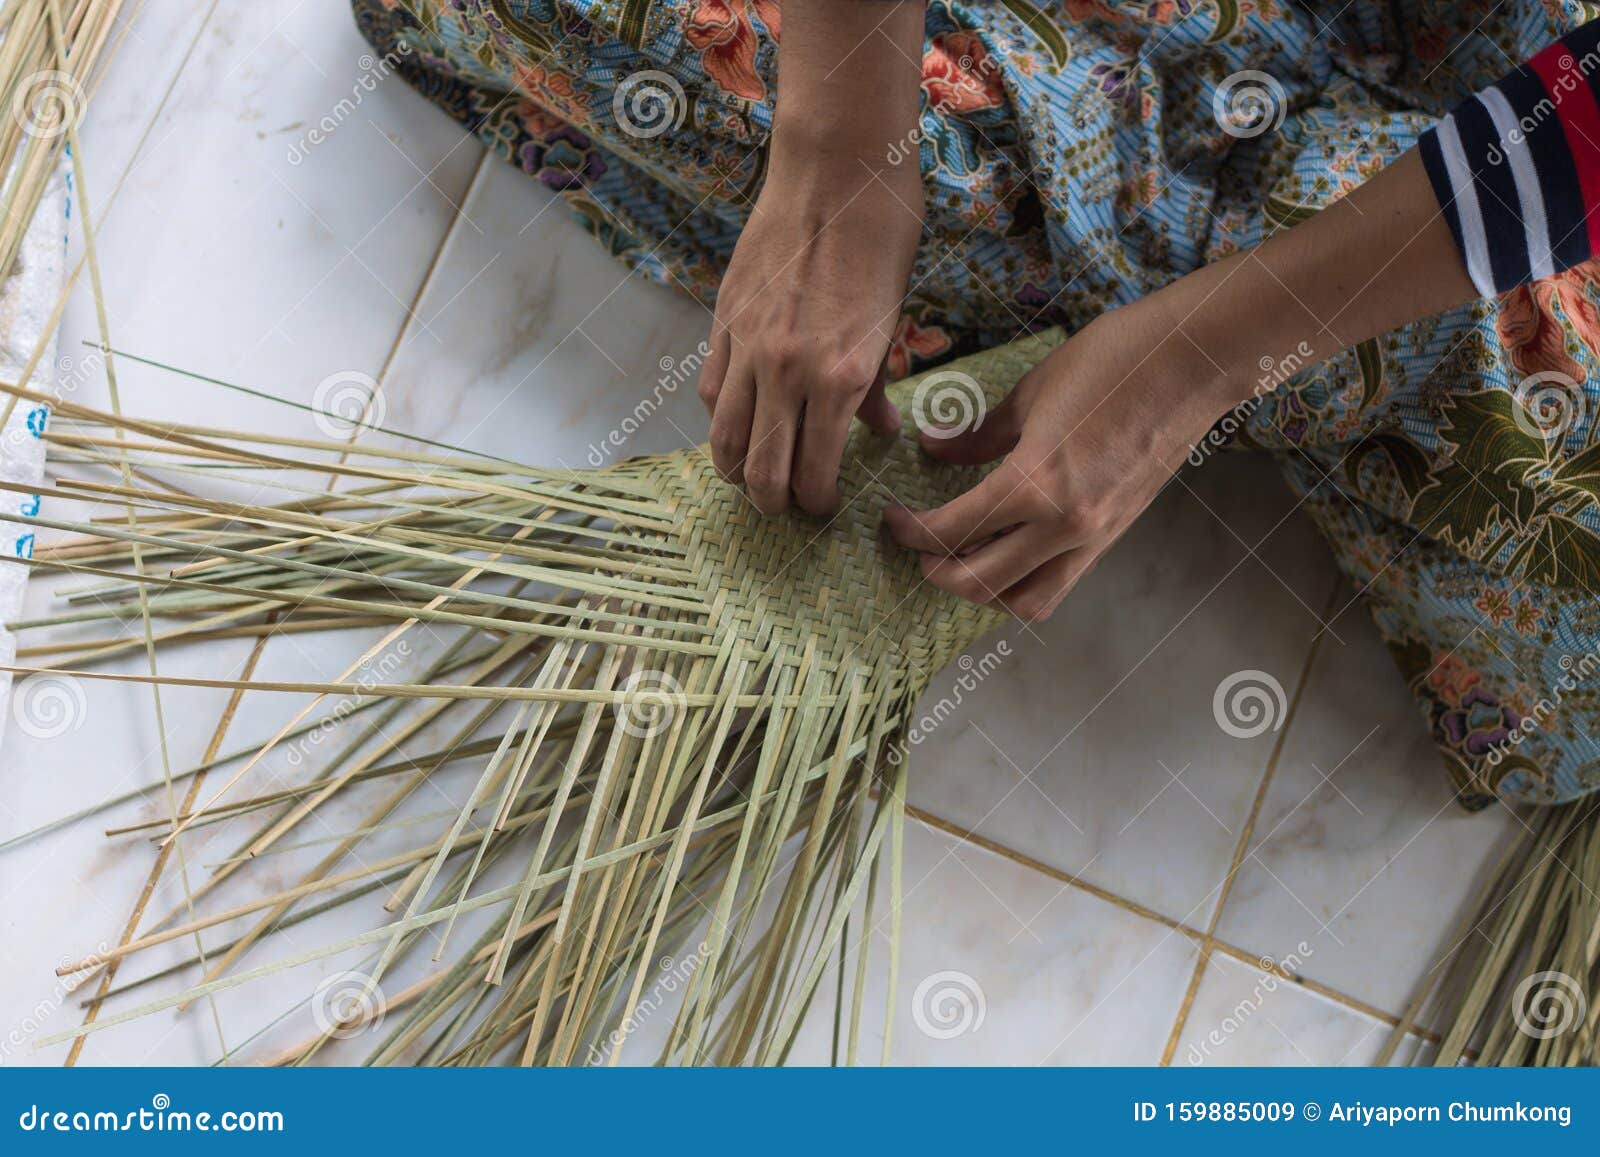 Weaving Lepironia Articalata Krajood or Sedg. Stock Image - Image of ...